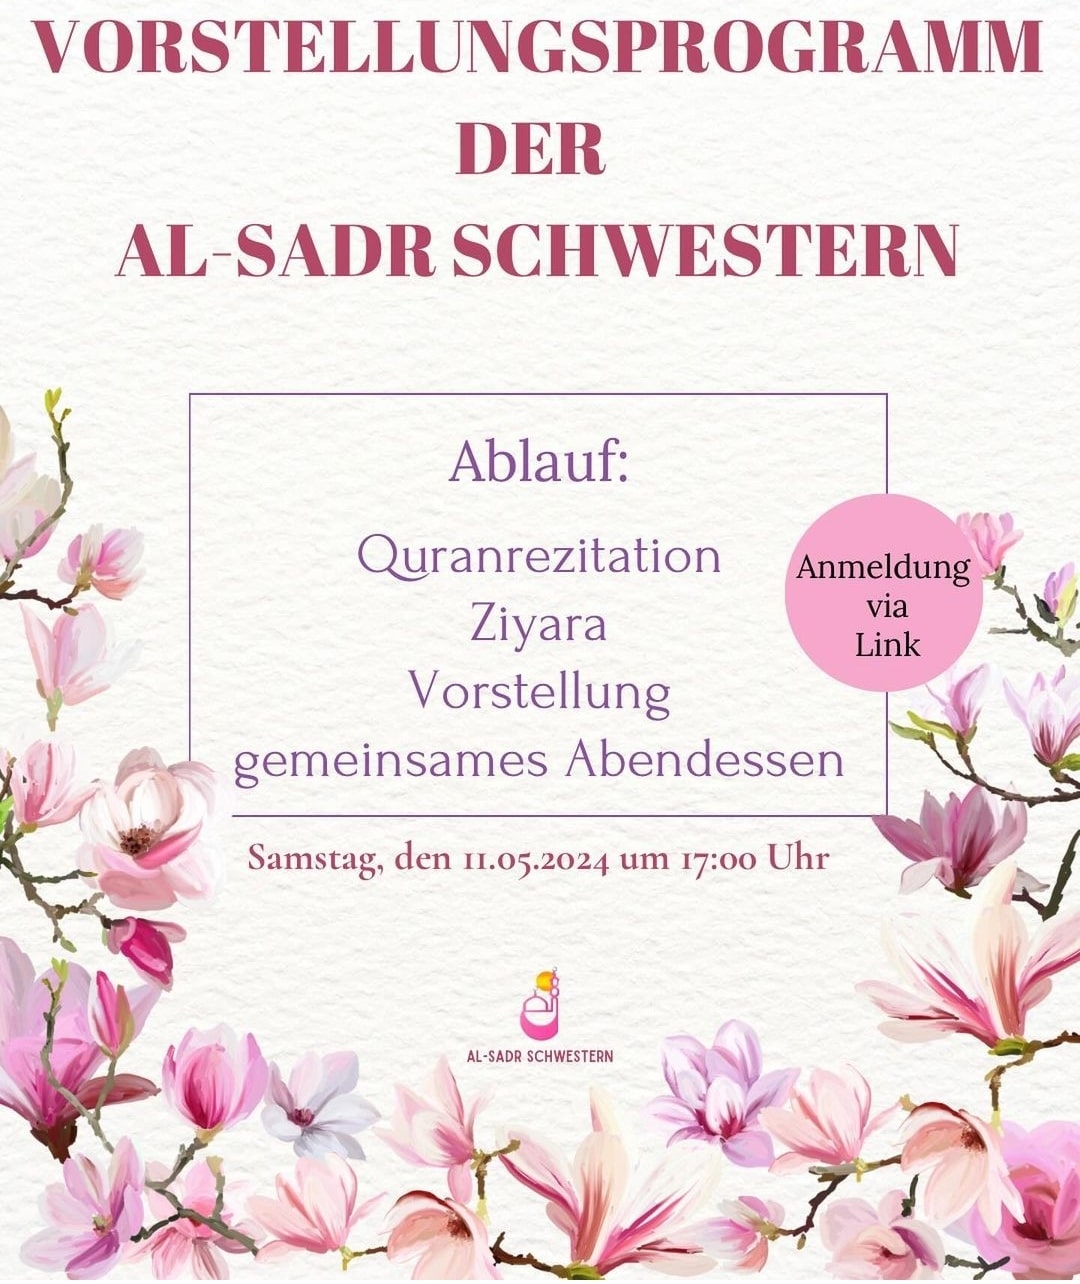 11.5. Al Sadr Schwestern Veranstaltung